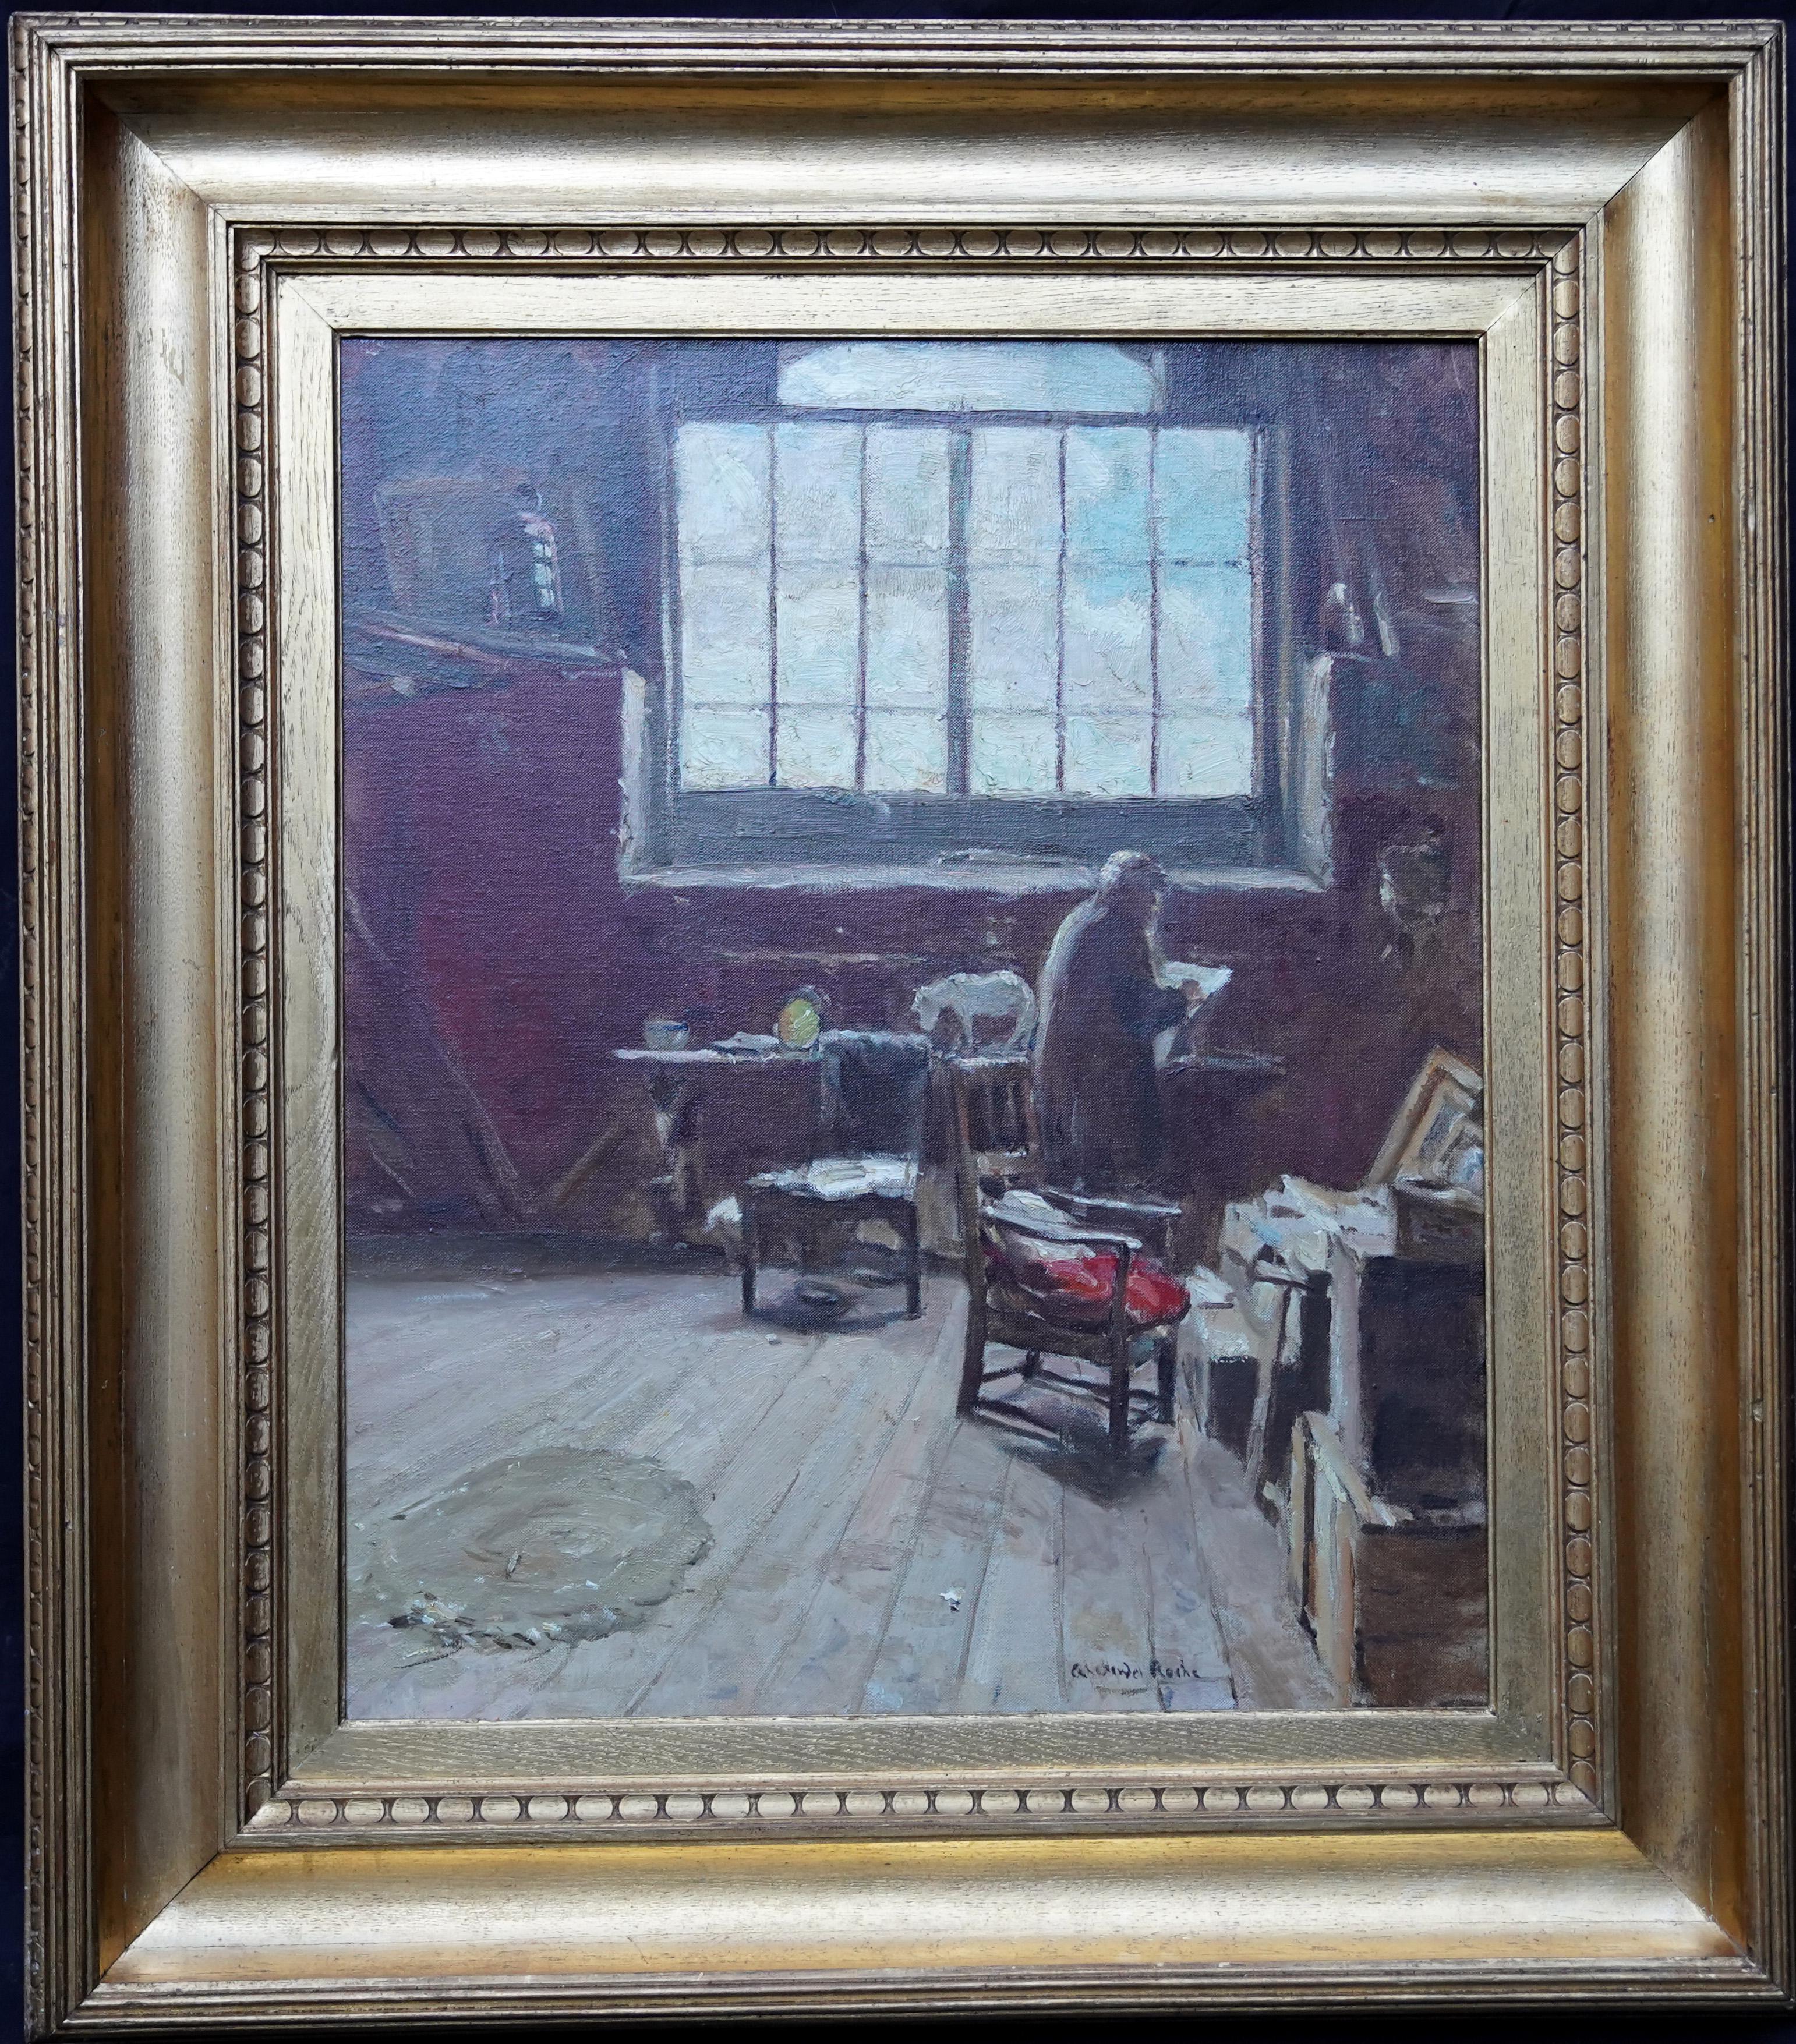 Alexander Roche Interior Painting - The Artist's Studio - Scottish 1914 Glasgow Boy art exh interior oil painting